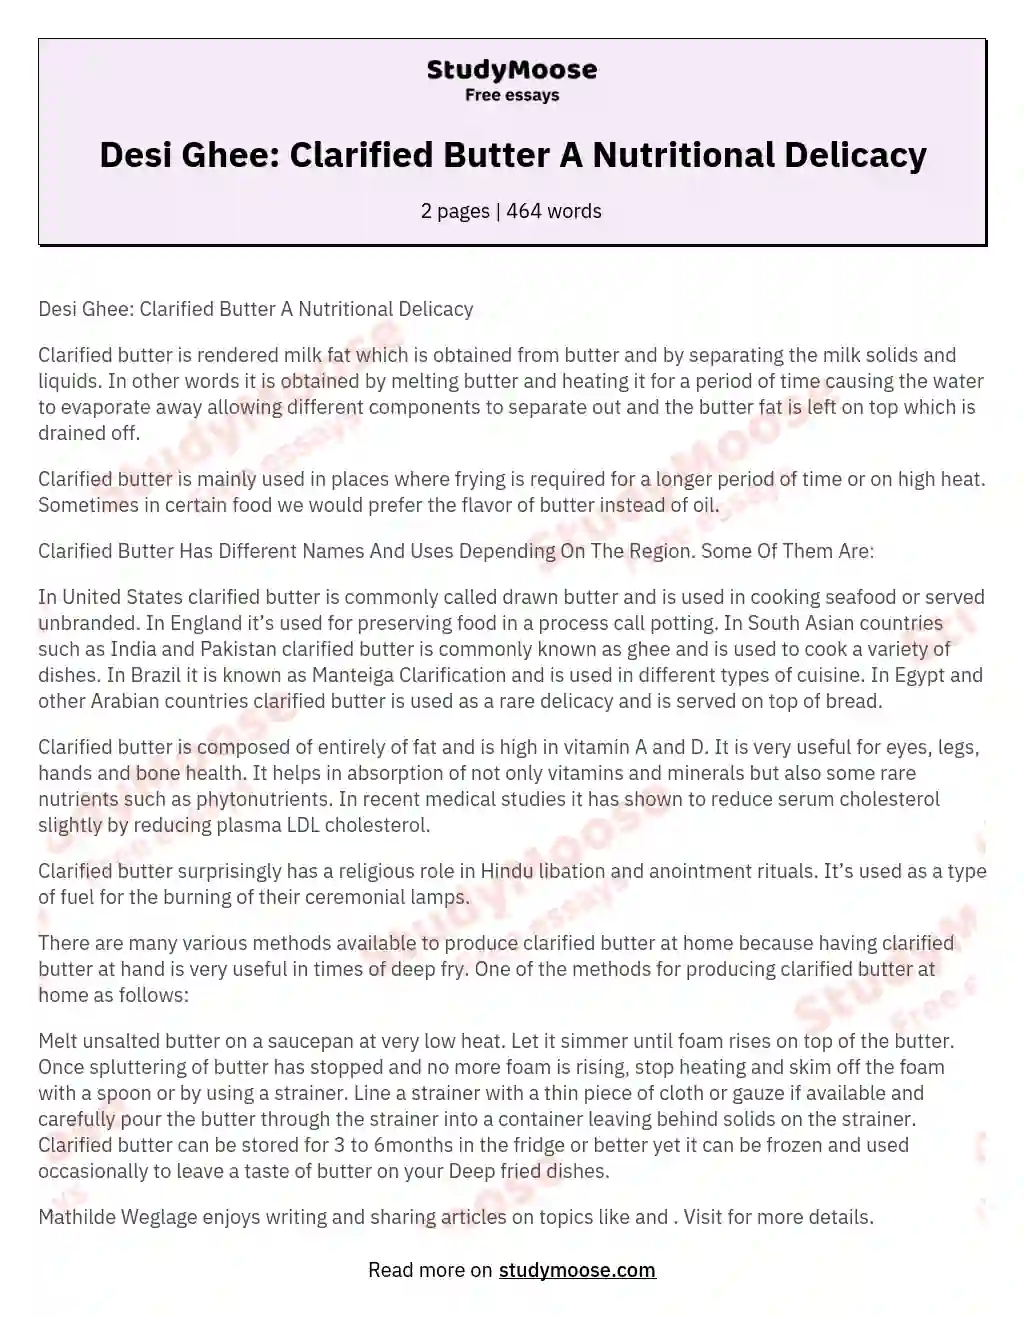 Desi Ghee: Clarified Butter A Nutritional Delicacy essay